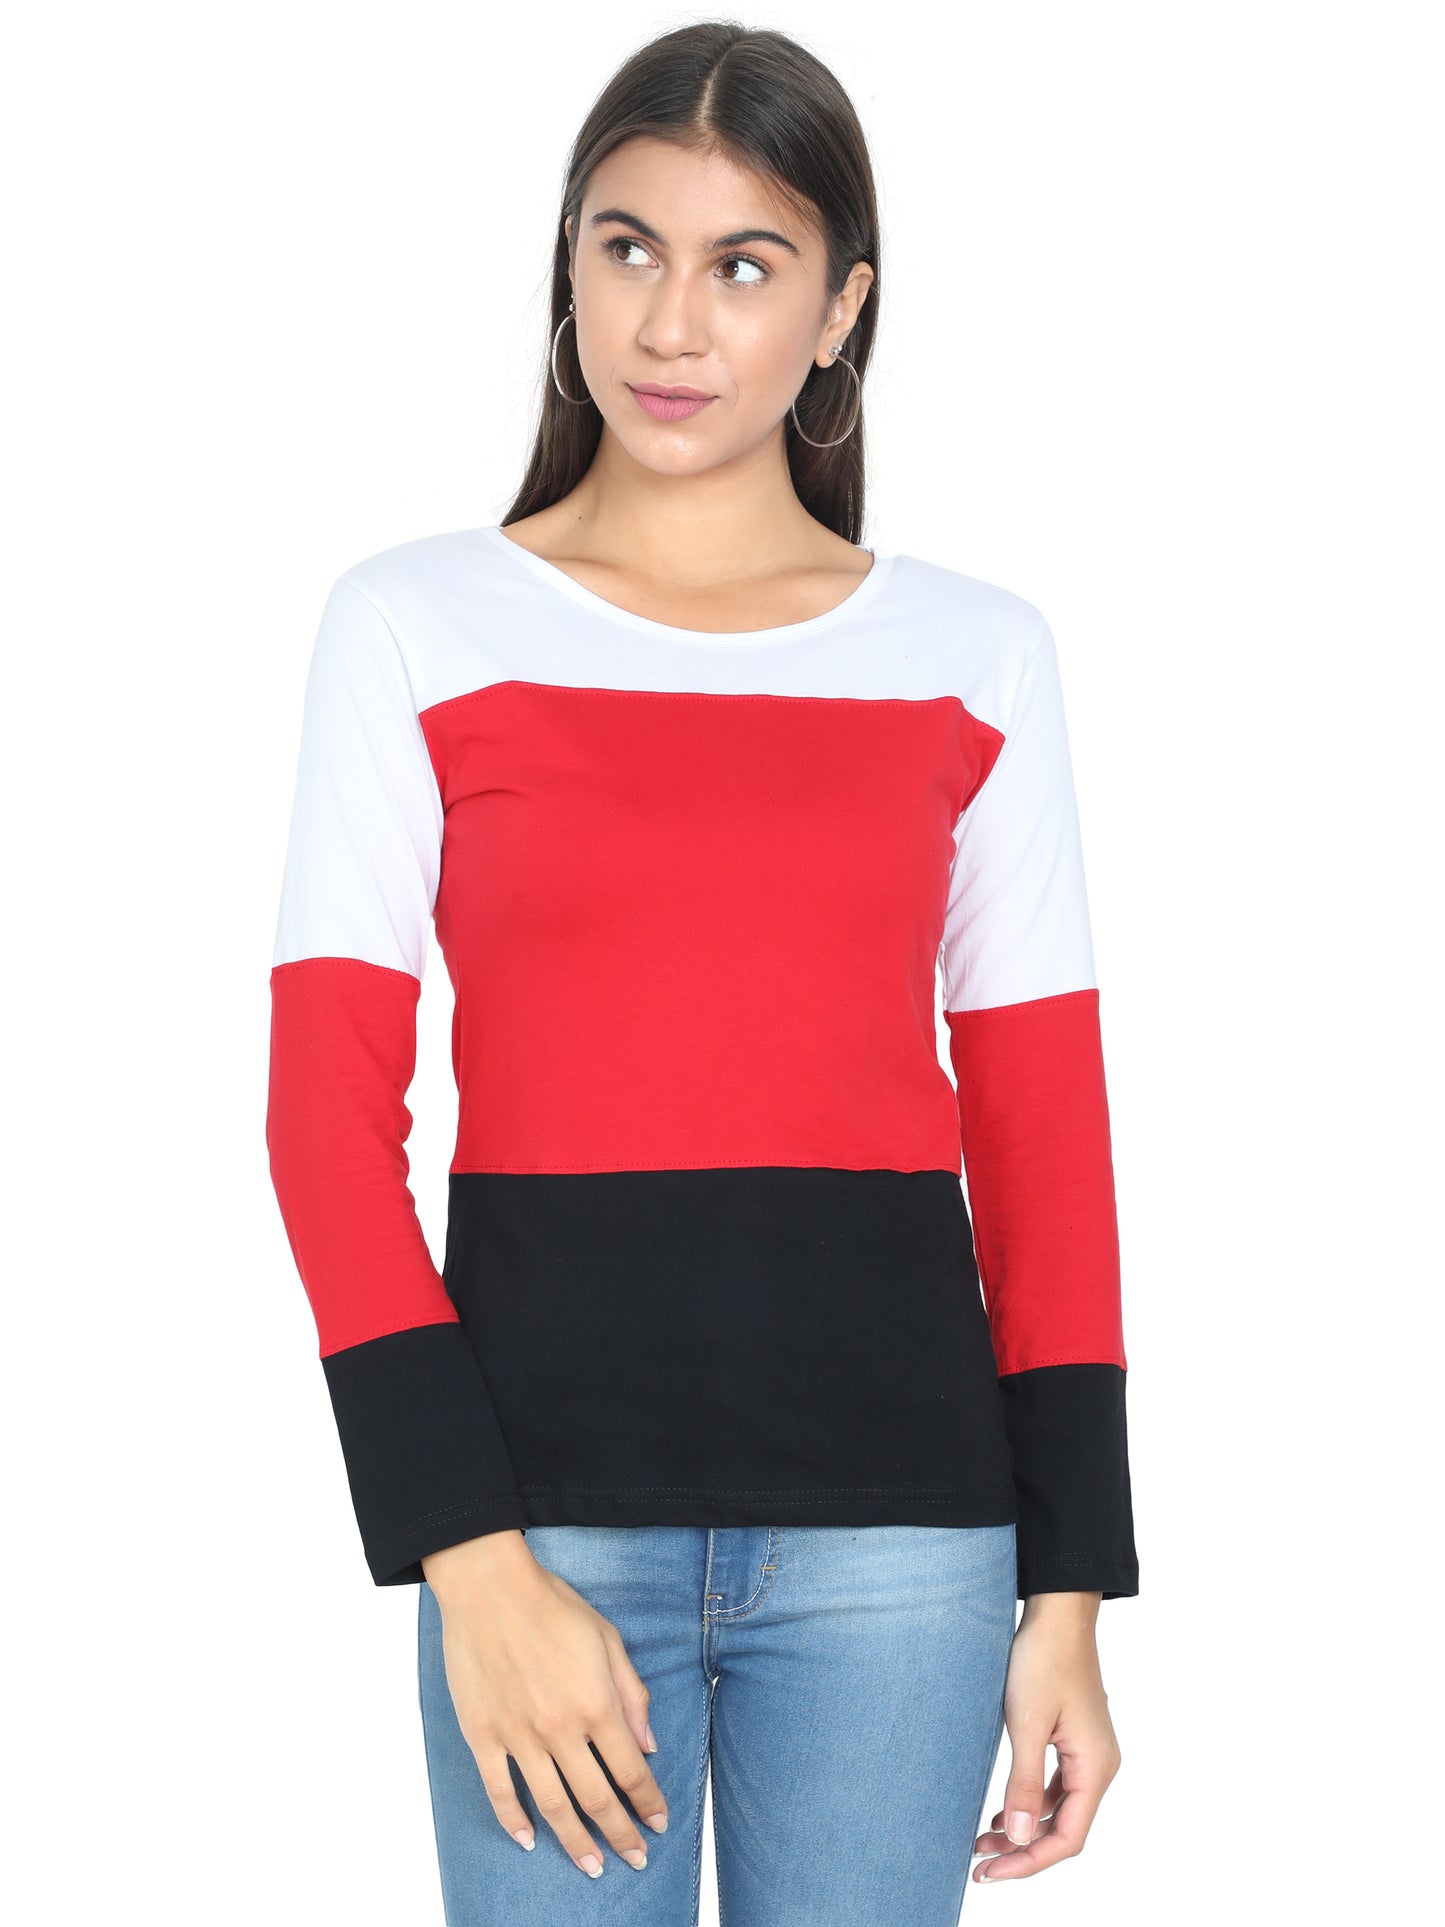 Women's Cotton Color Block Full Sleeve T-Shirt